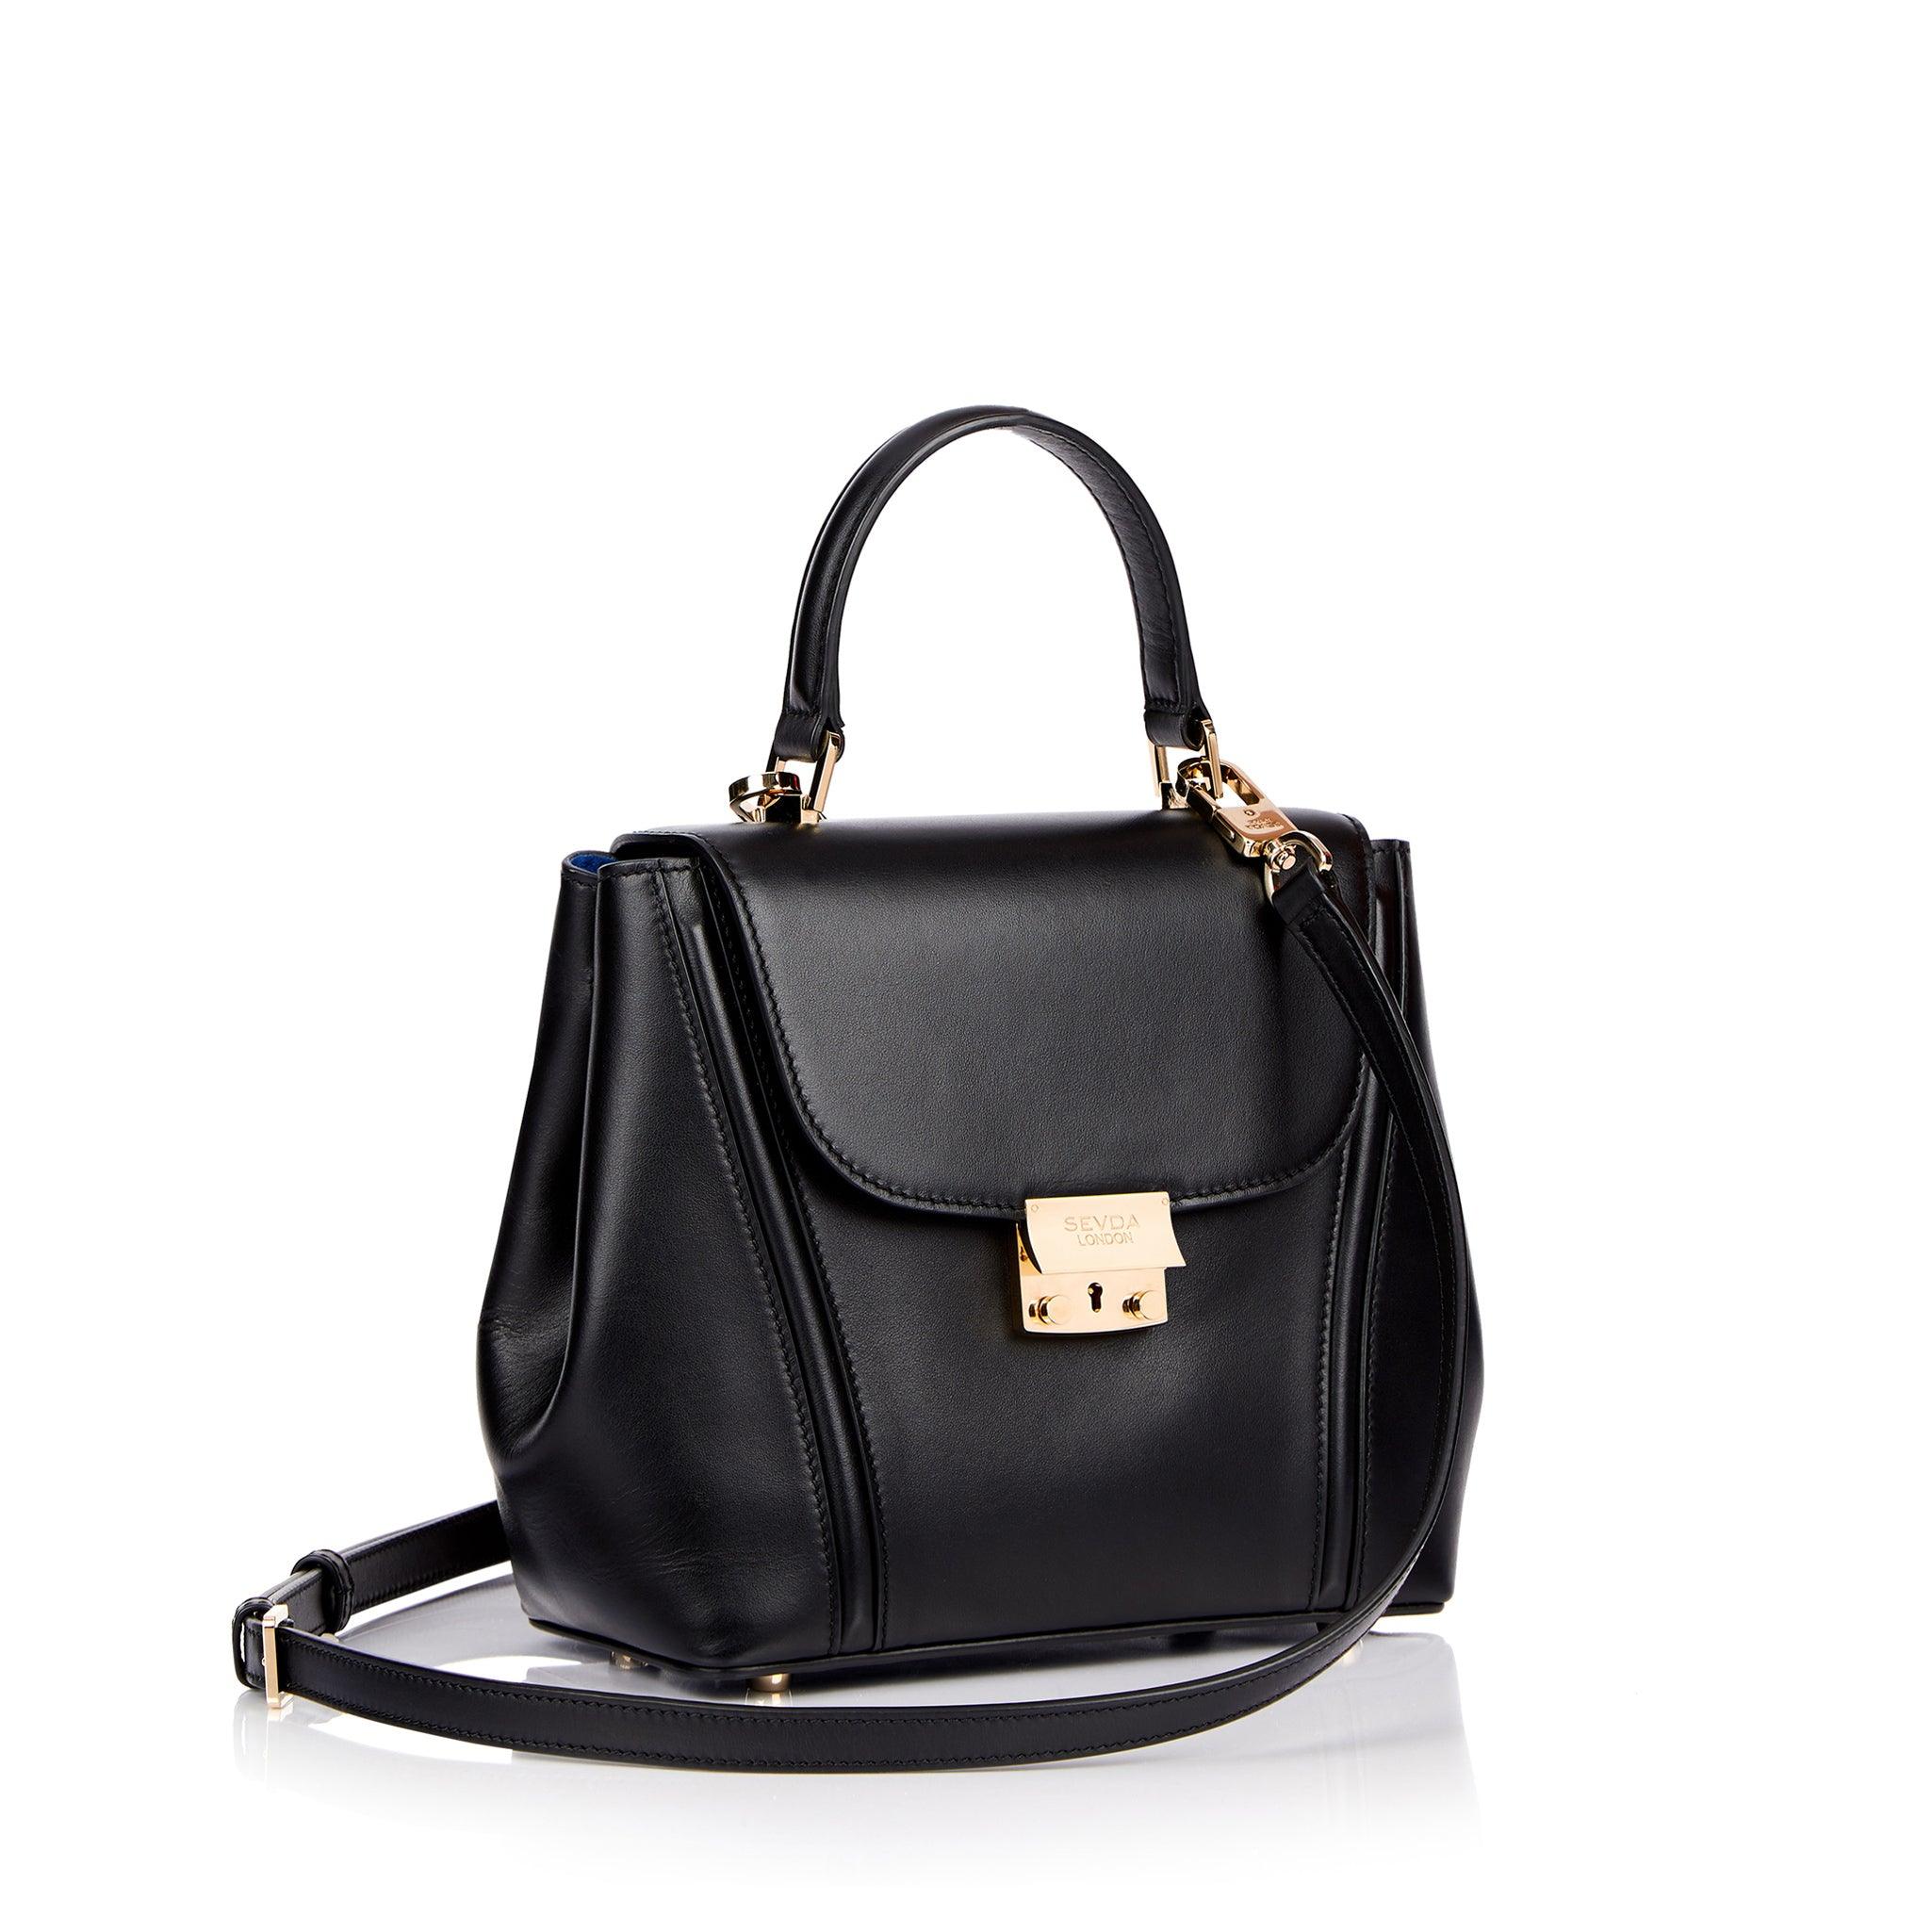 Small Black Top Handle Designer Bag - A fusion of elegance and craftsmanship, responsibly sourced.